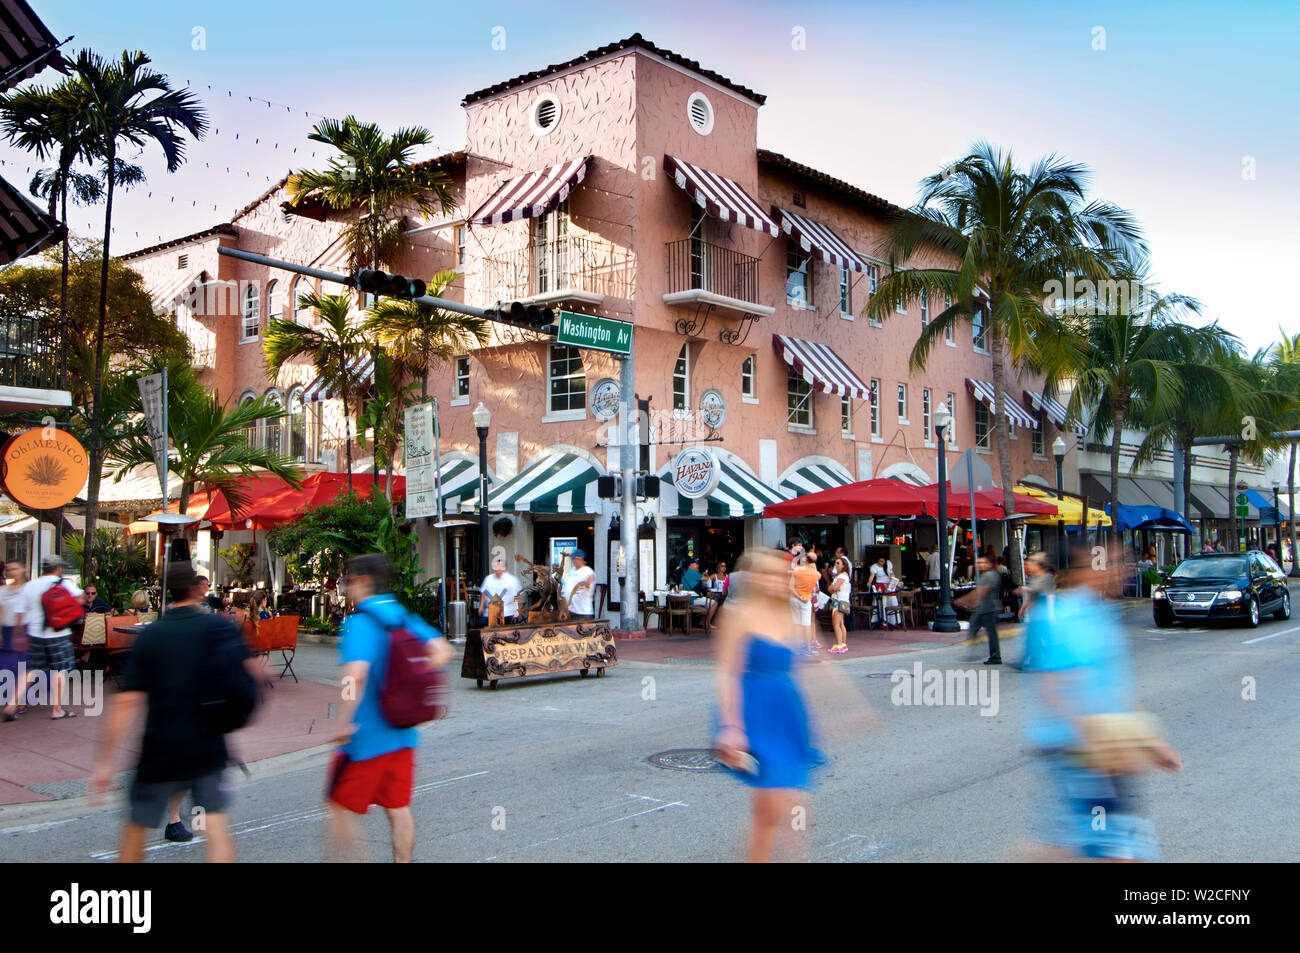 Washington Avenue looking north at 5th Street, Miami Beach, Florida -  Digital Commonwealth